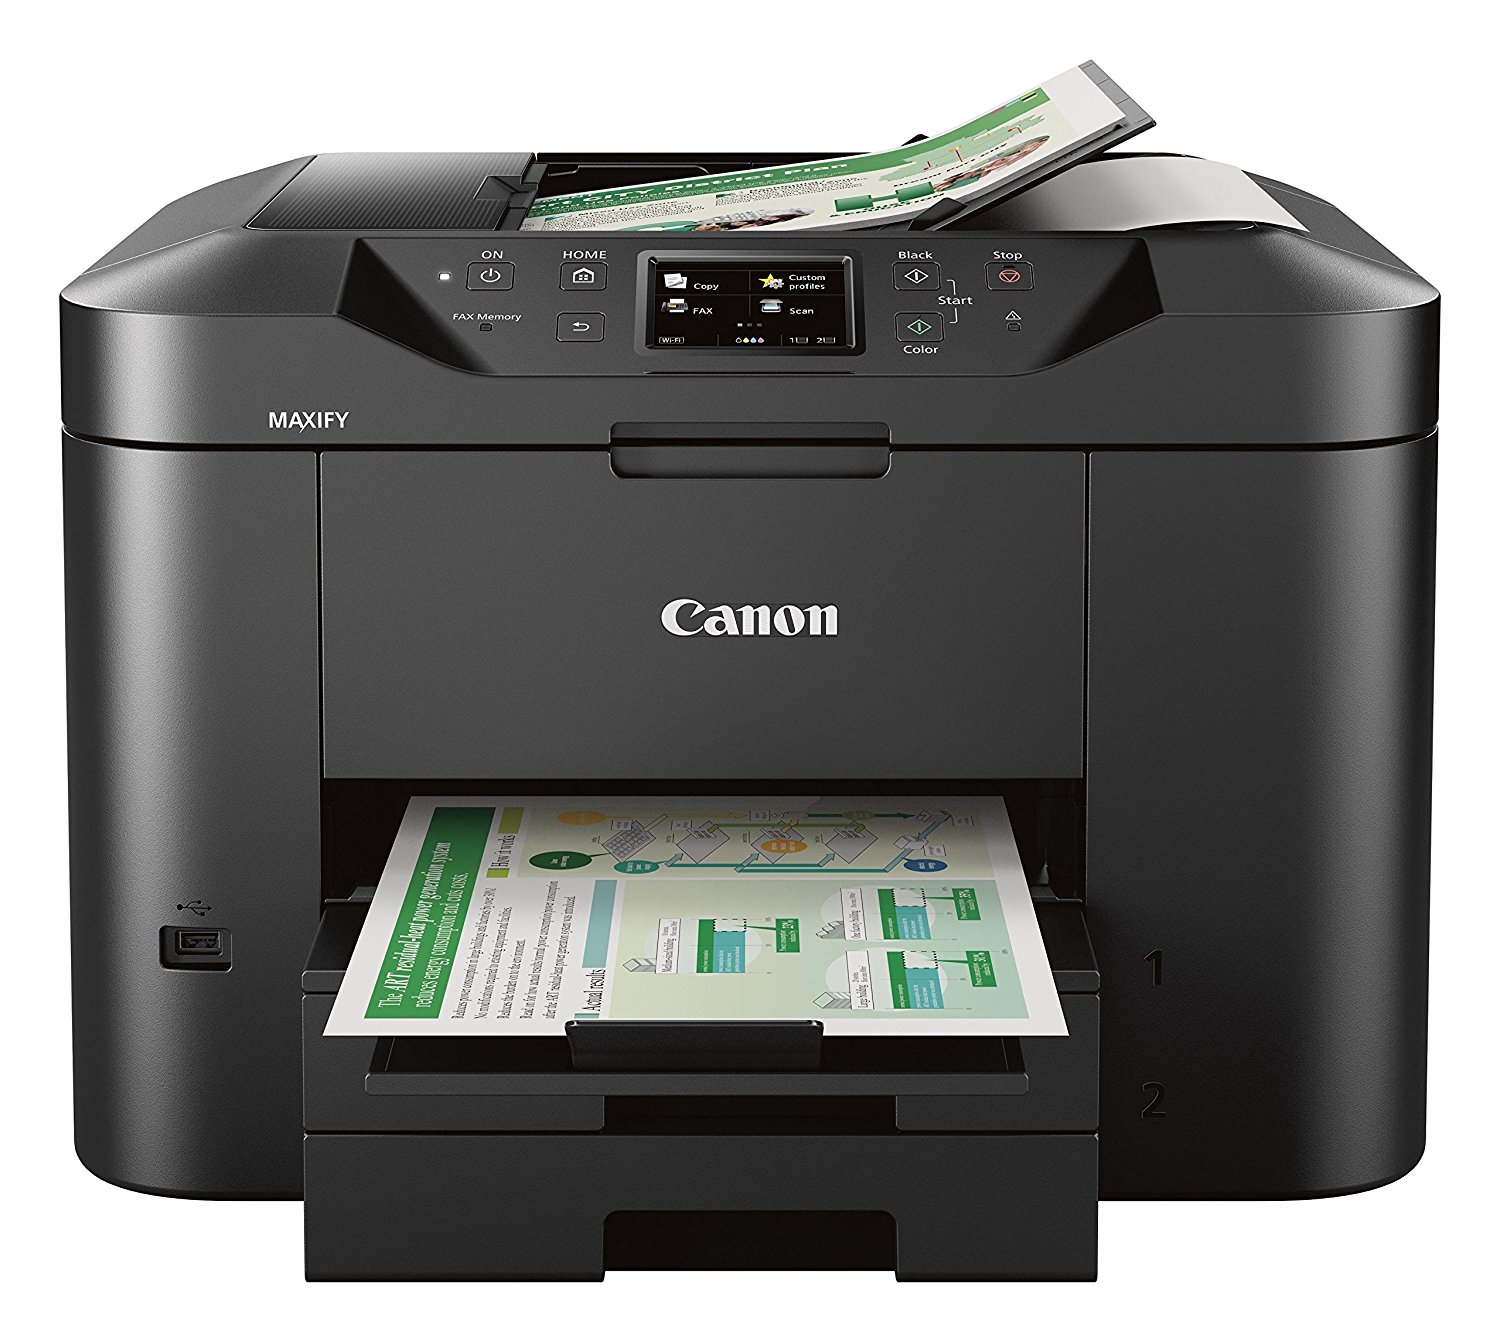 canon ip2700 printer not printing properly